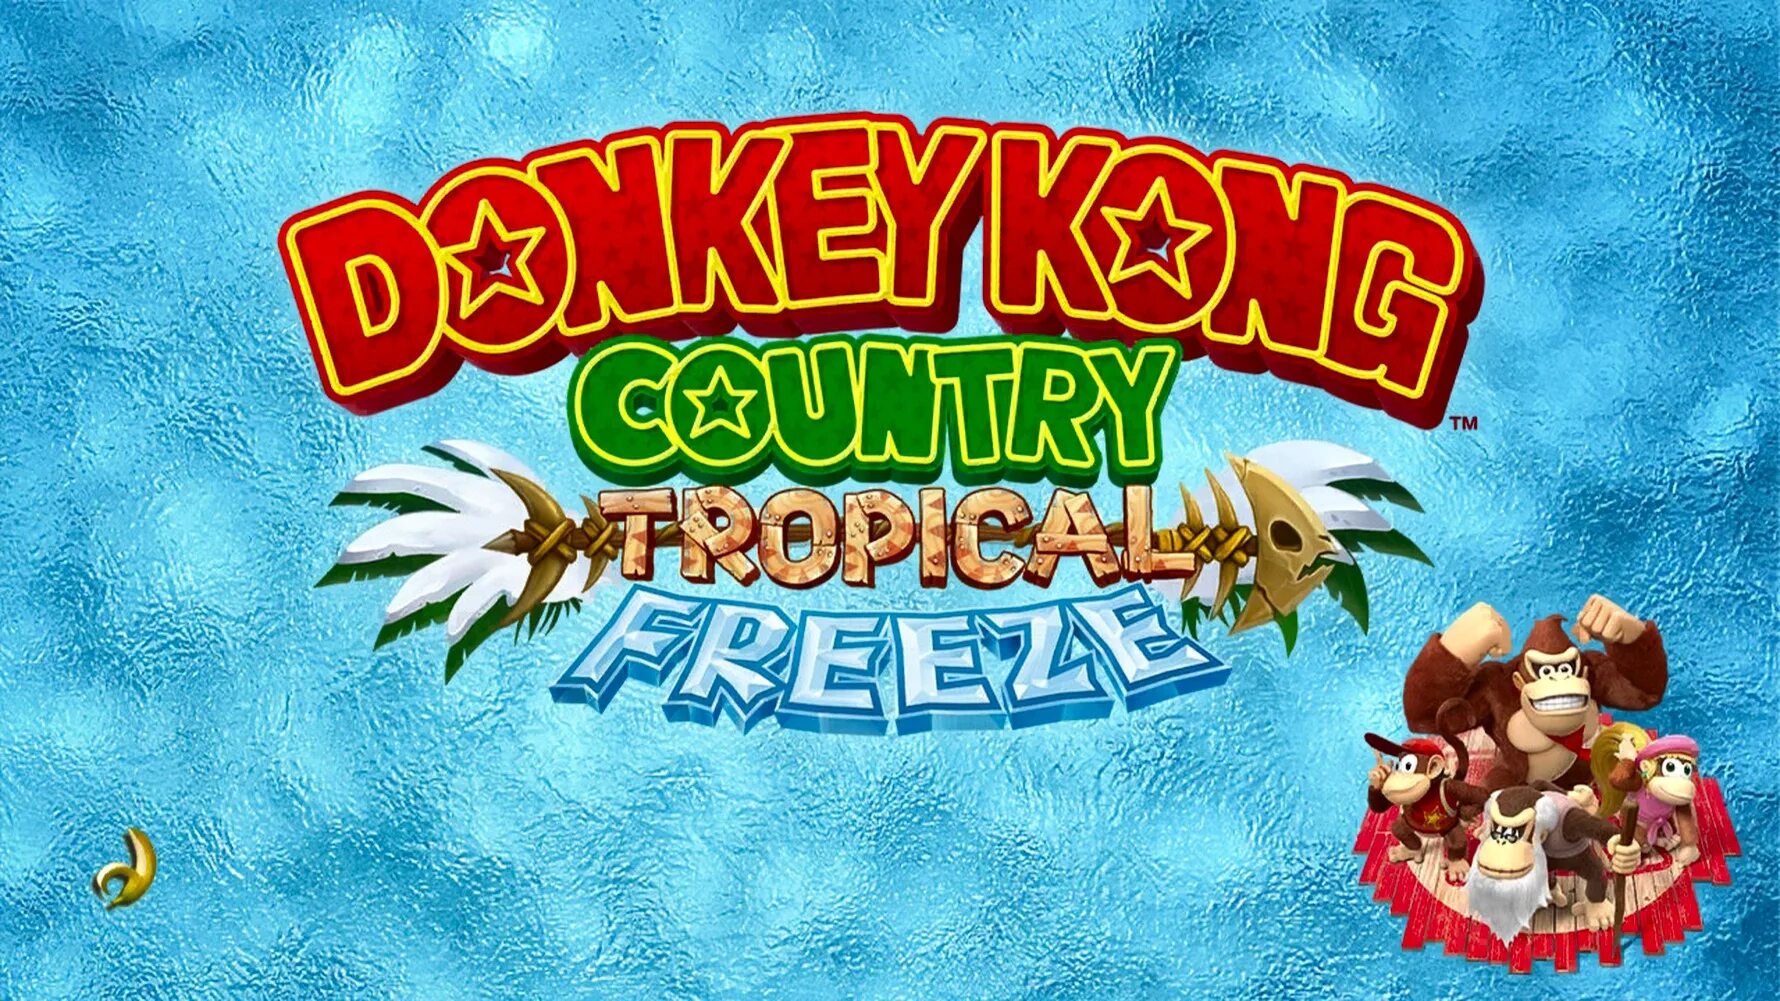 Donkey kong country tropical. Donkey Kong Country Tropical Freeze Switch. Donkey Kong Country Tropical Freeze Wii u. Картридж Nintendo Switch Donkey Kong Country: Tropical Freeze. Donkey Kong Country Tropical Freeze обложка.